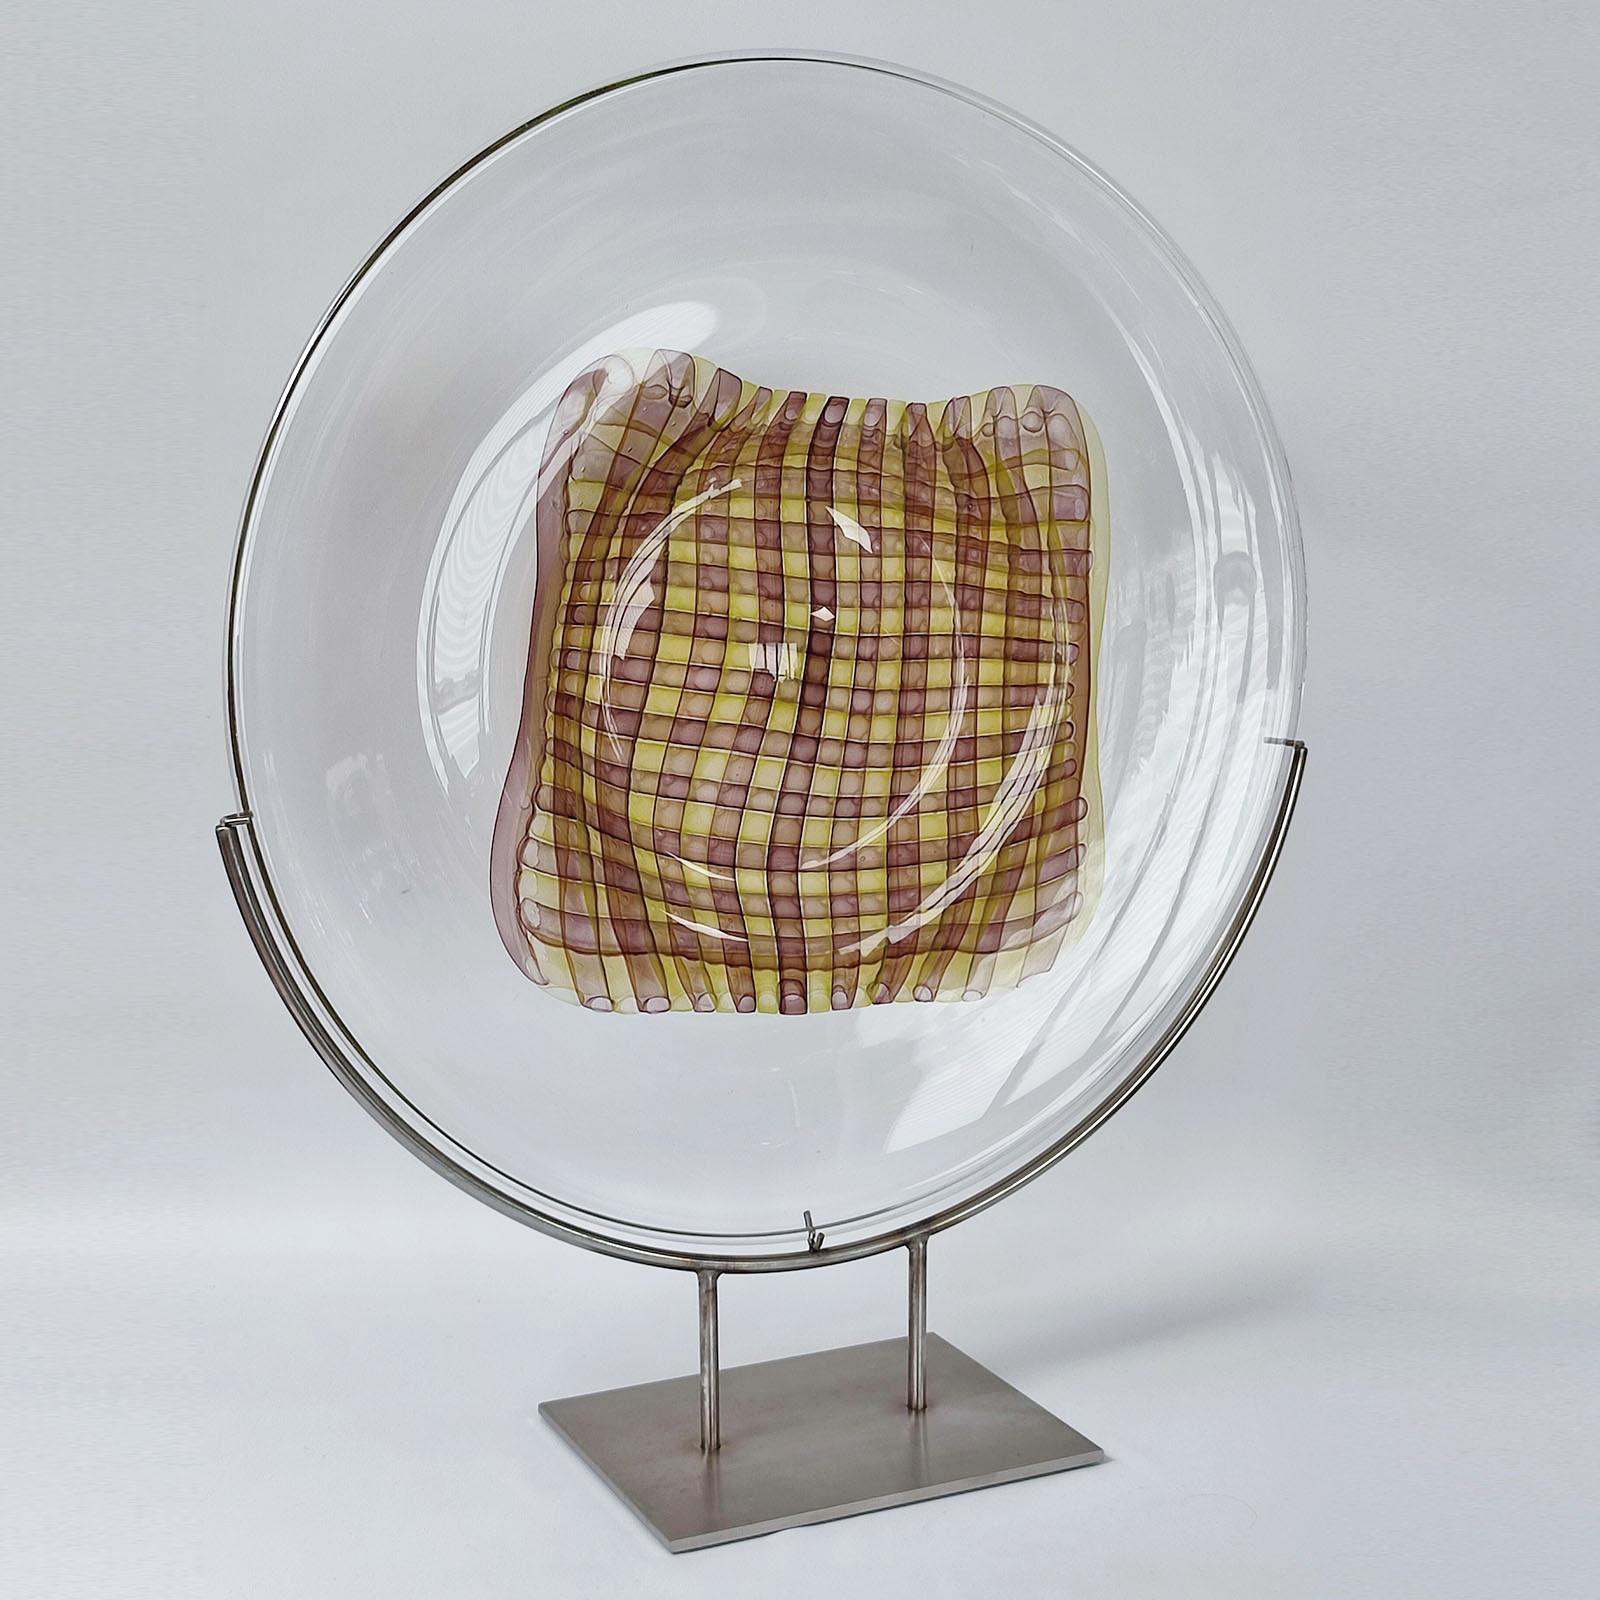 European Gary Beecham Large Decorative Glass Plate 'Textile Vessel', 1982 For Sale